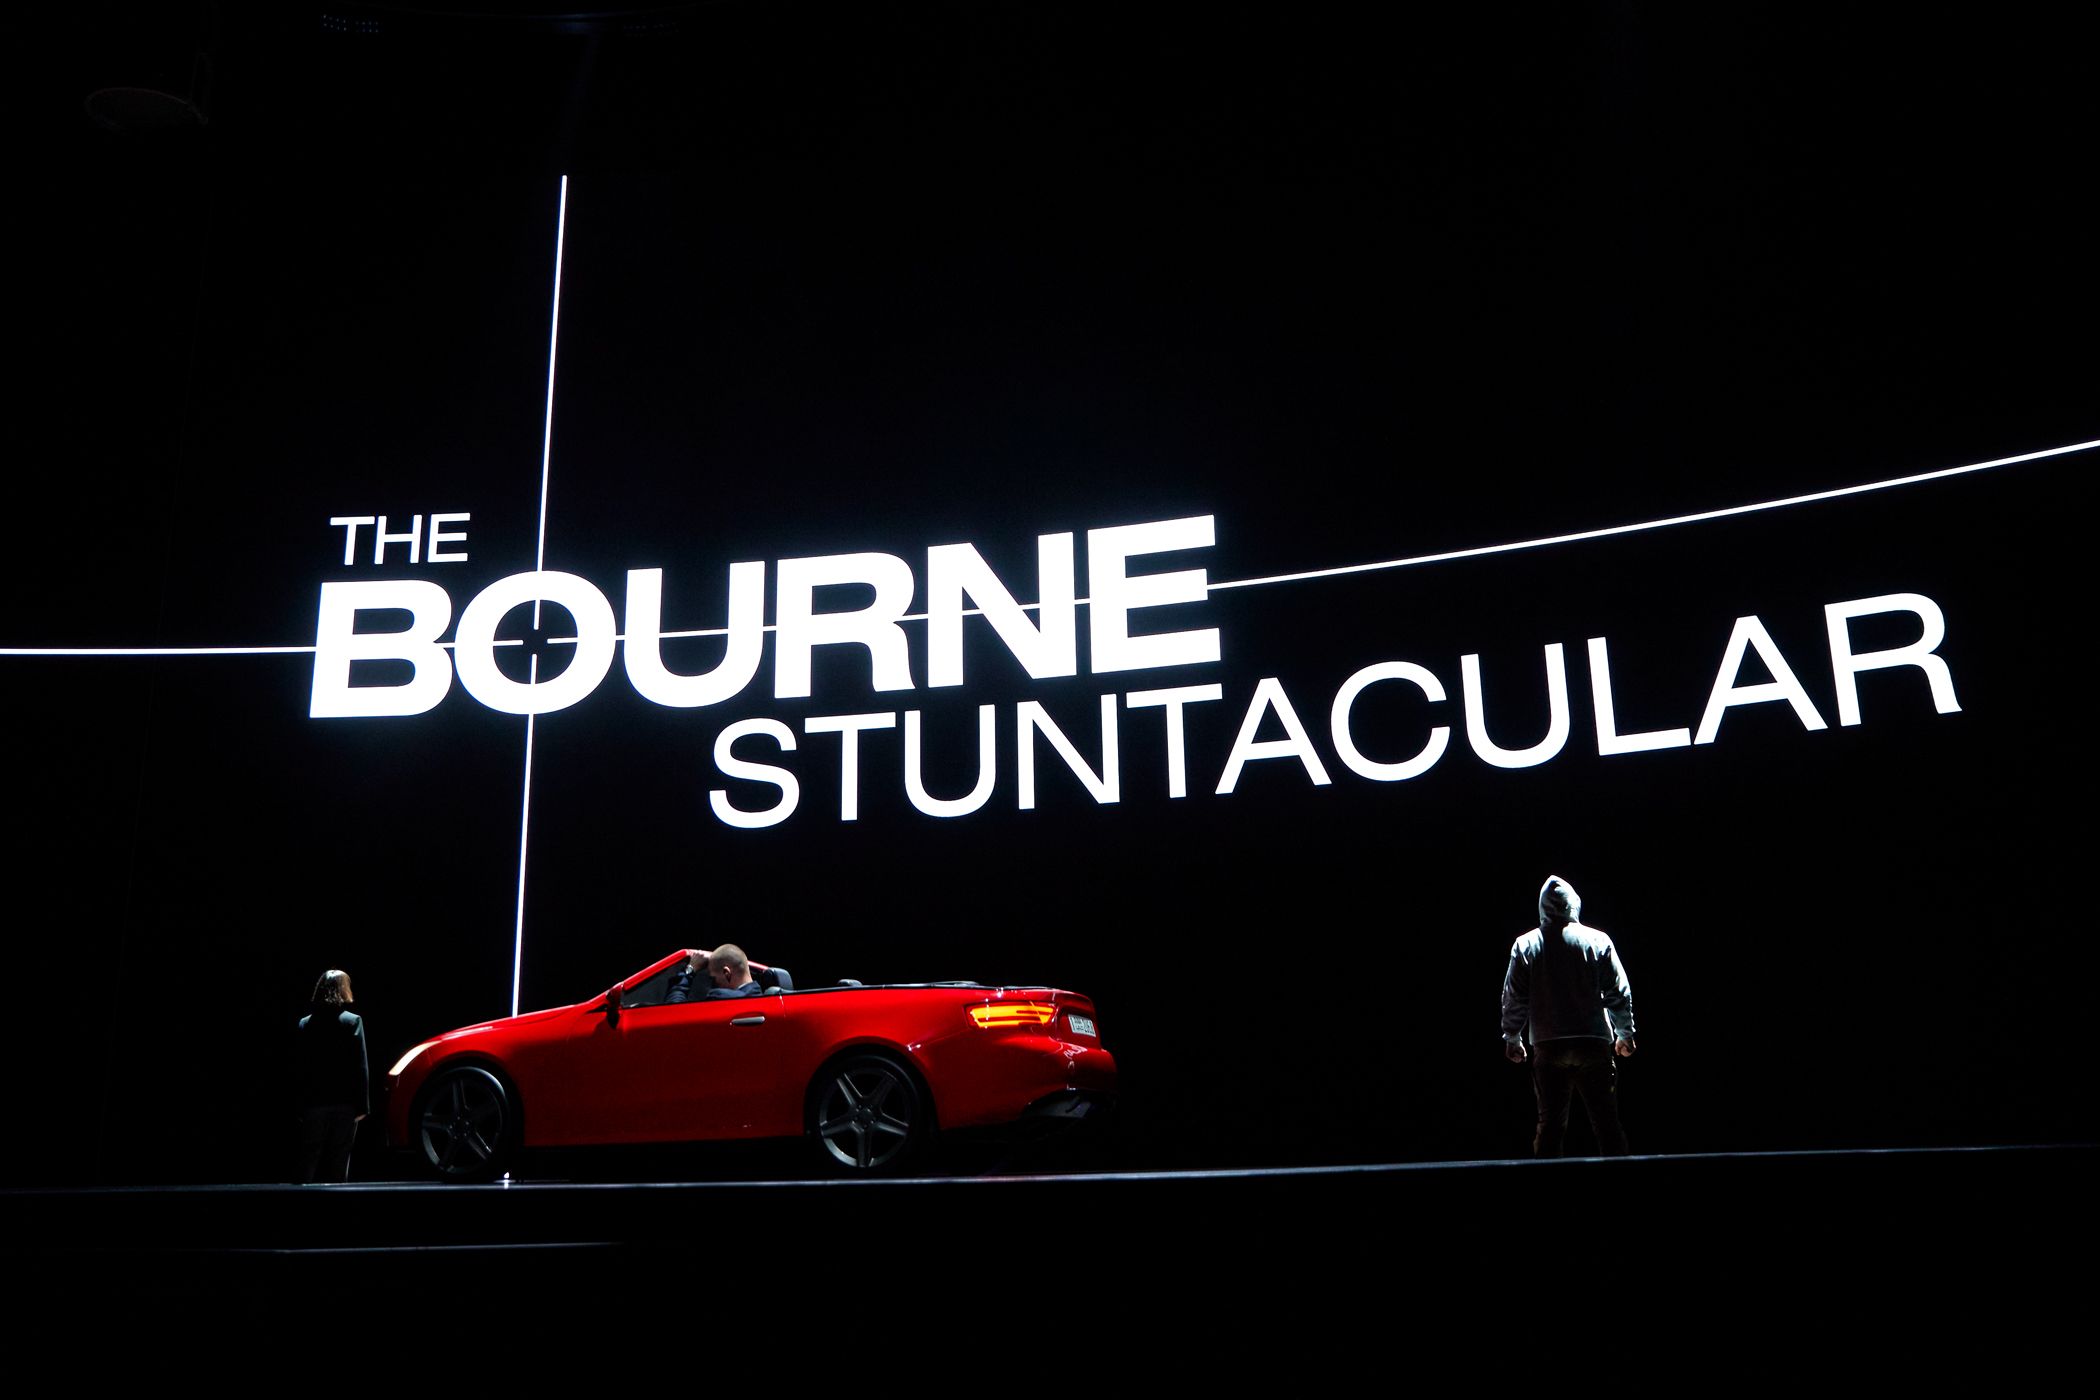 Bourne Stuntacular show at universal orlando